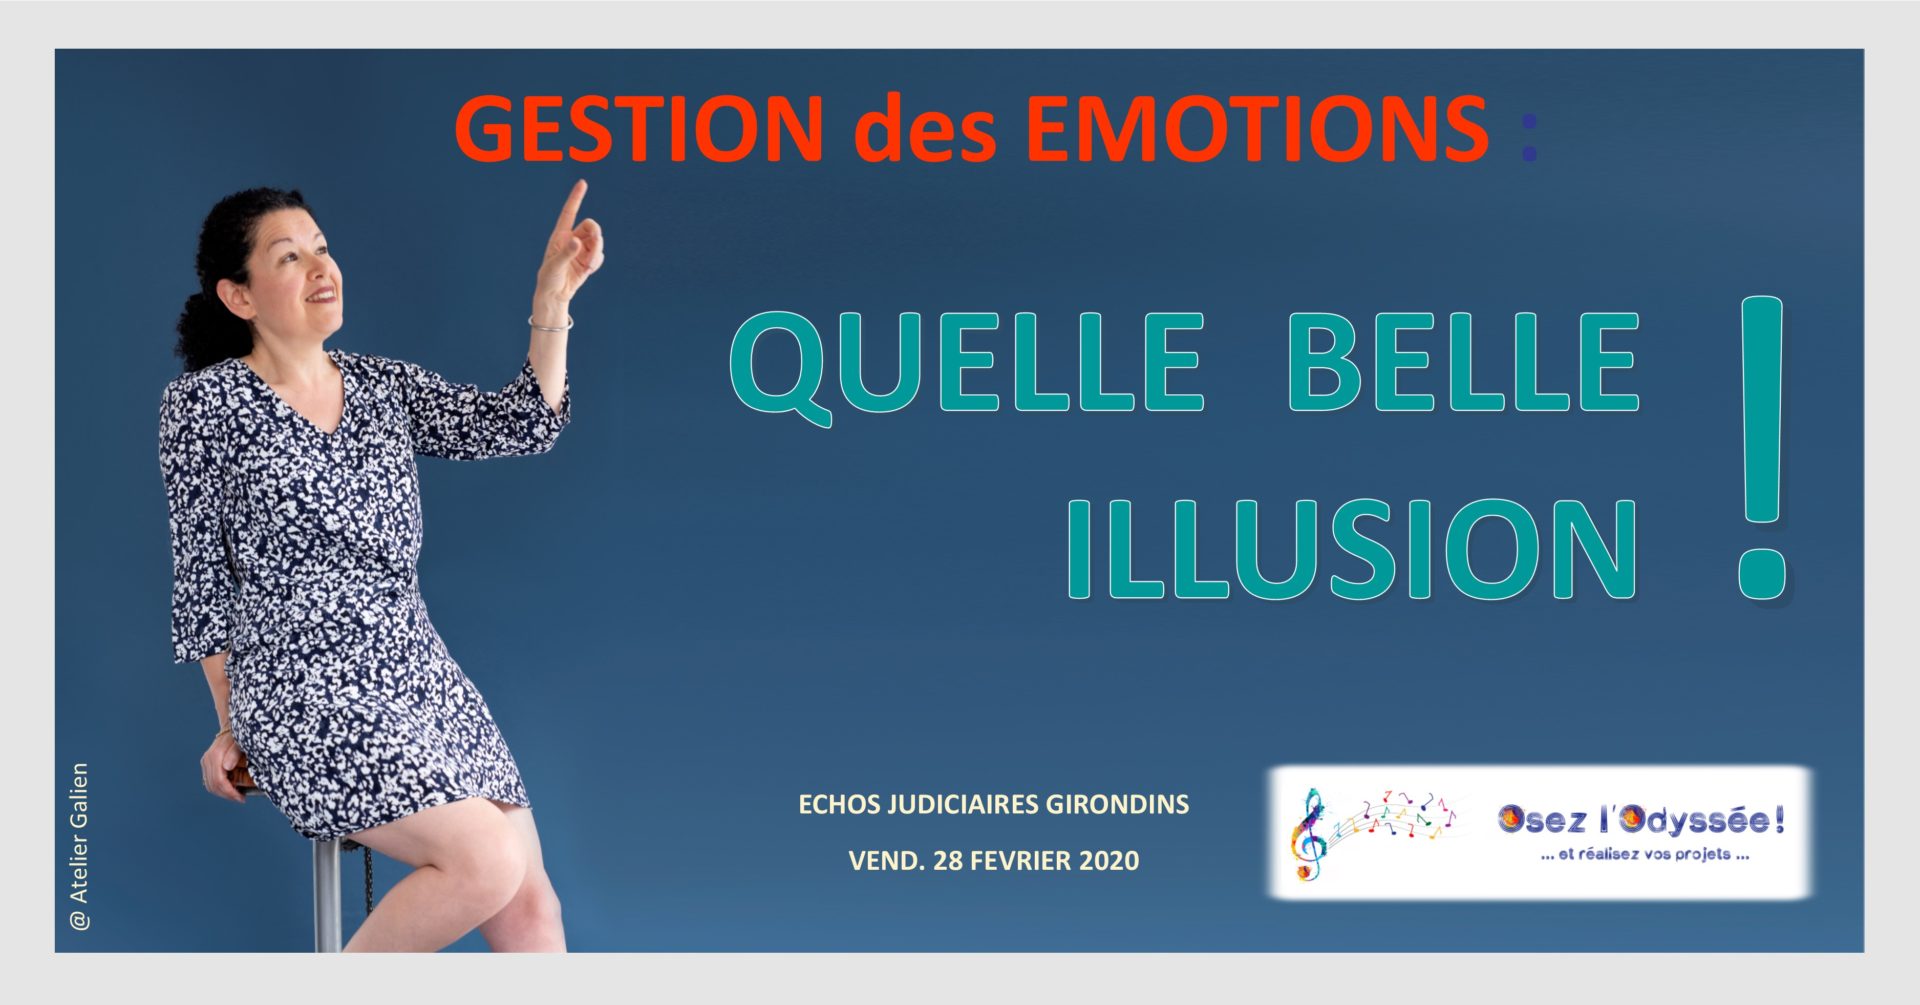 gestion des emotions - chronique par Clio Franguiadakis - Osez l'Odyssee